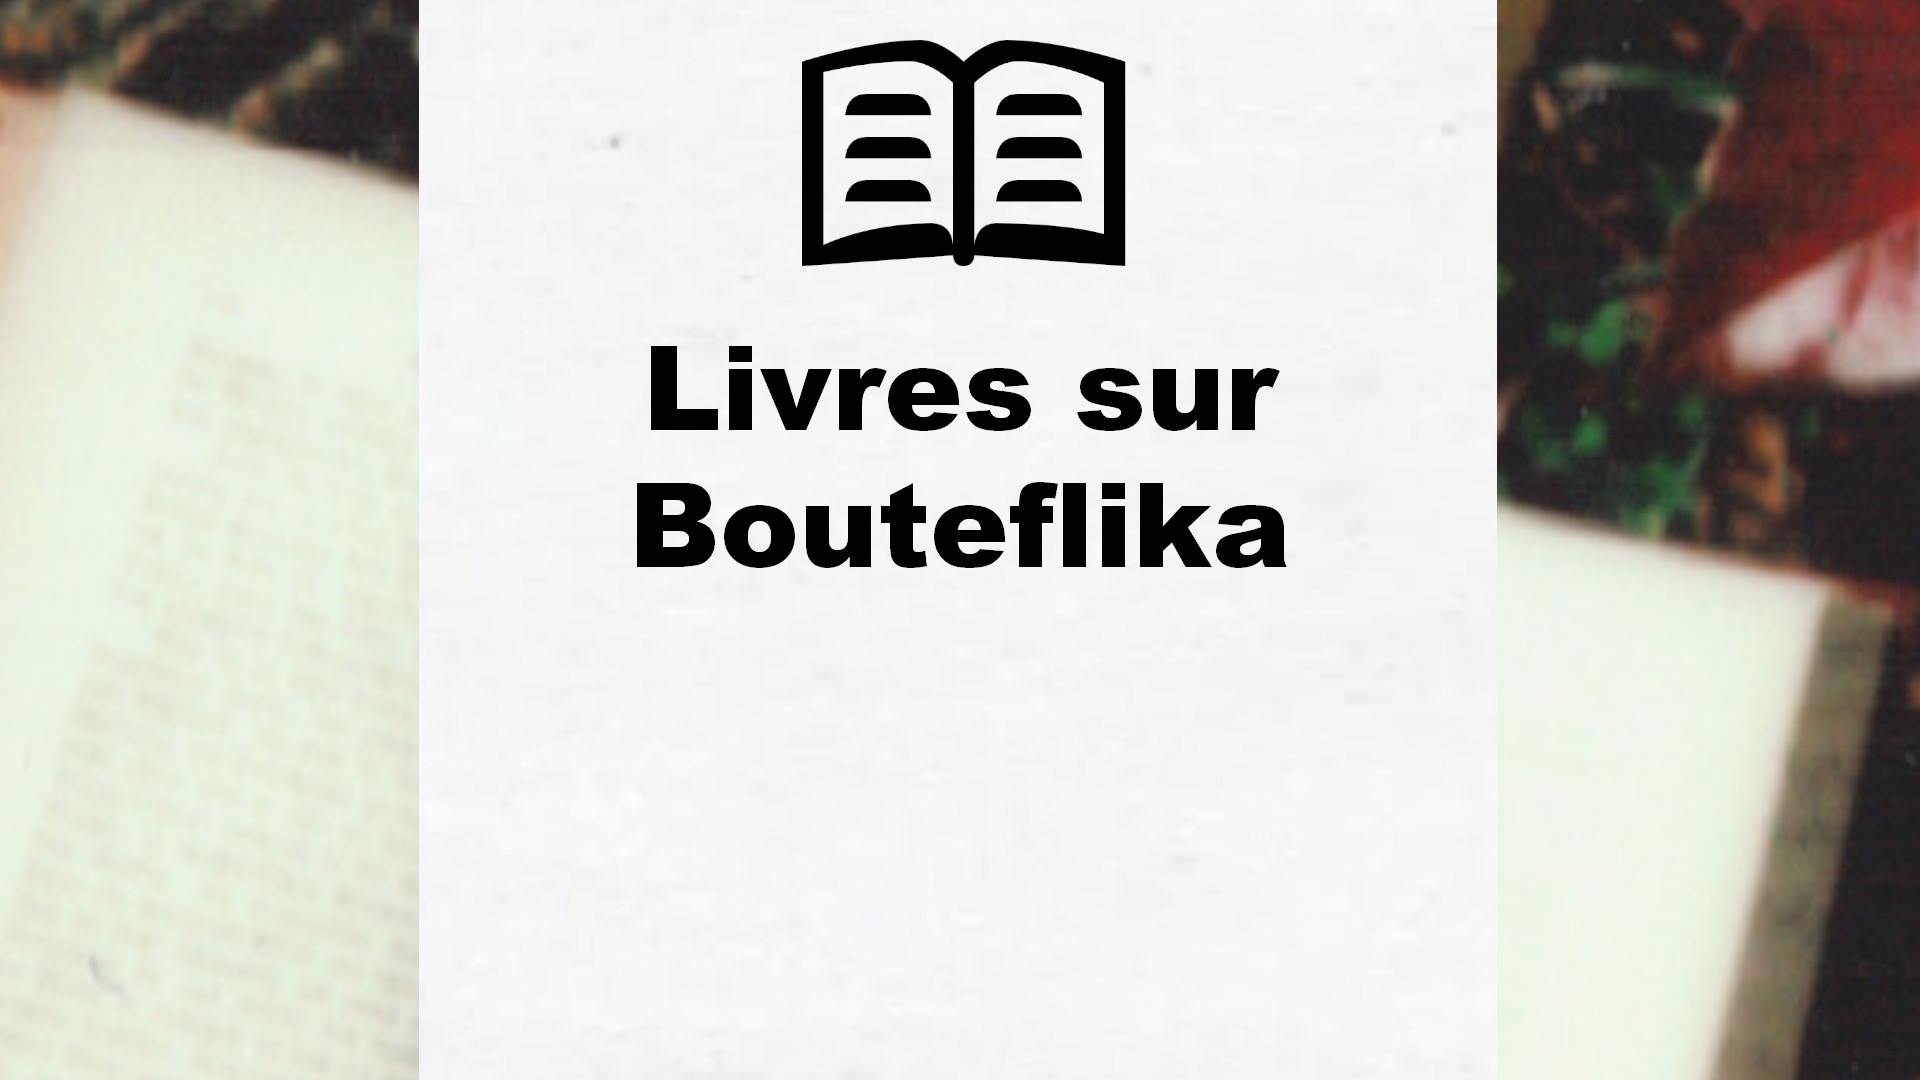 Livres sur Bouteflika